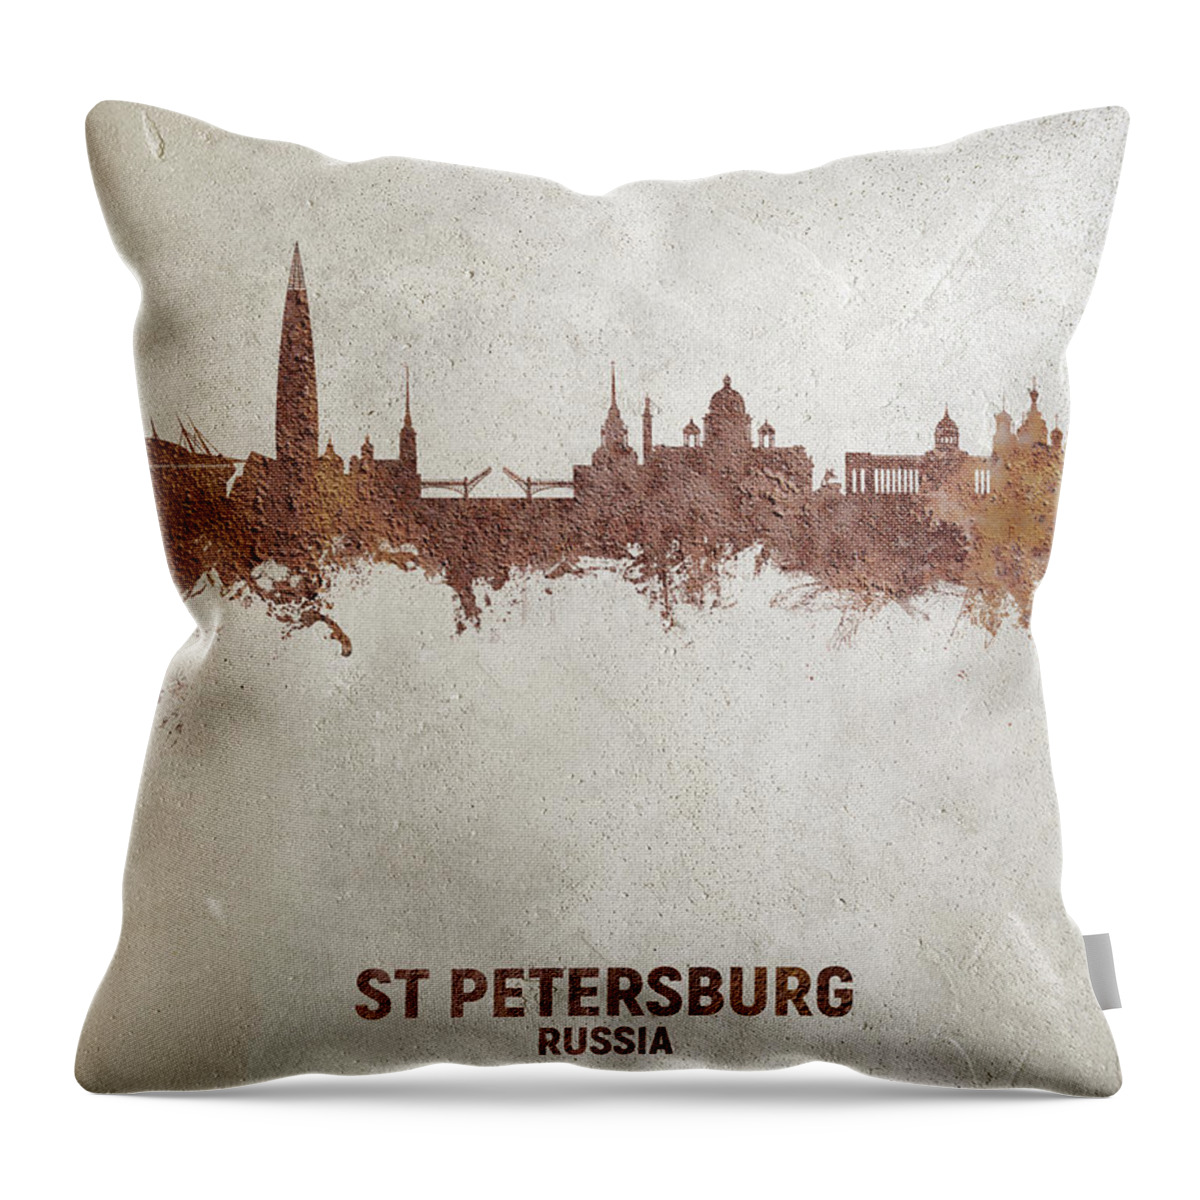 St Petersburg Throw Pillow featuring the digital art St Petersburg Russia Skyline #66 by Michael Tompsett